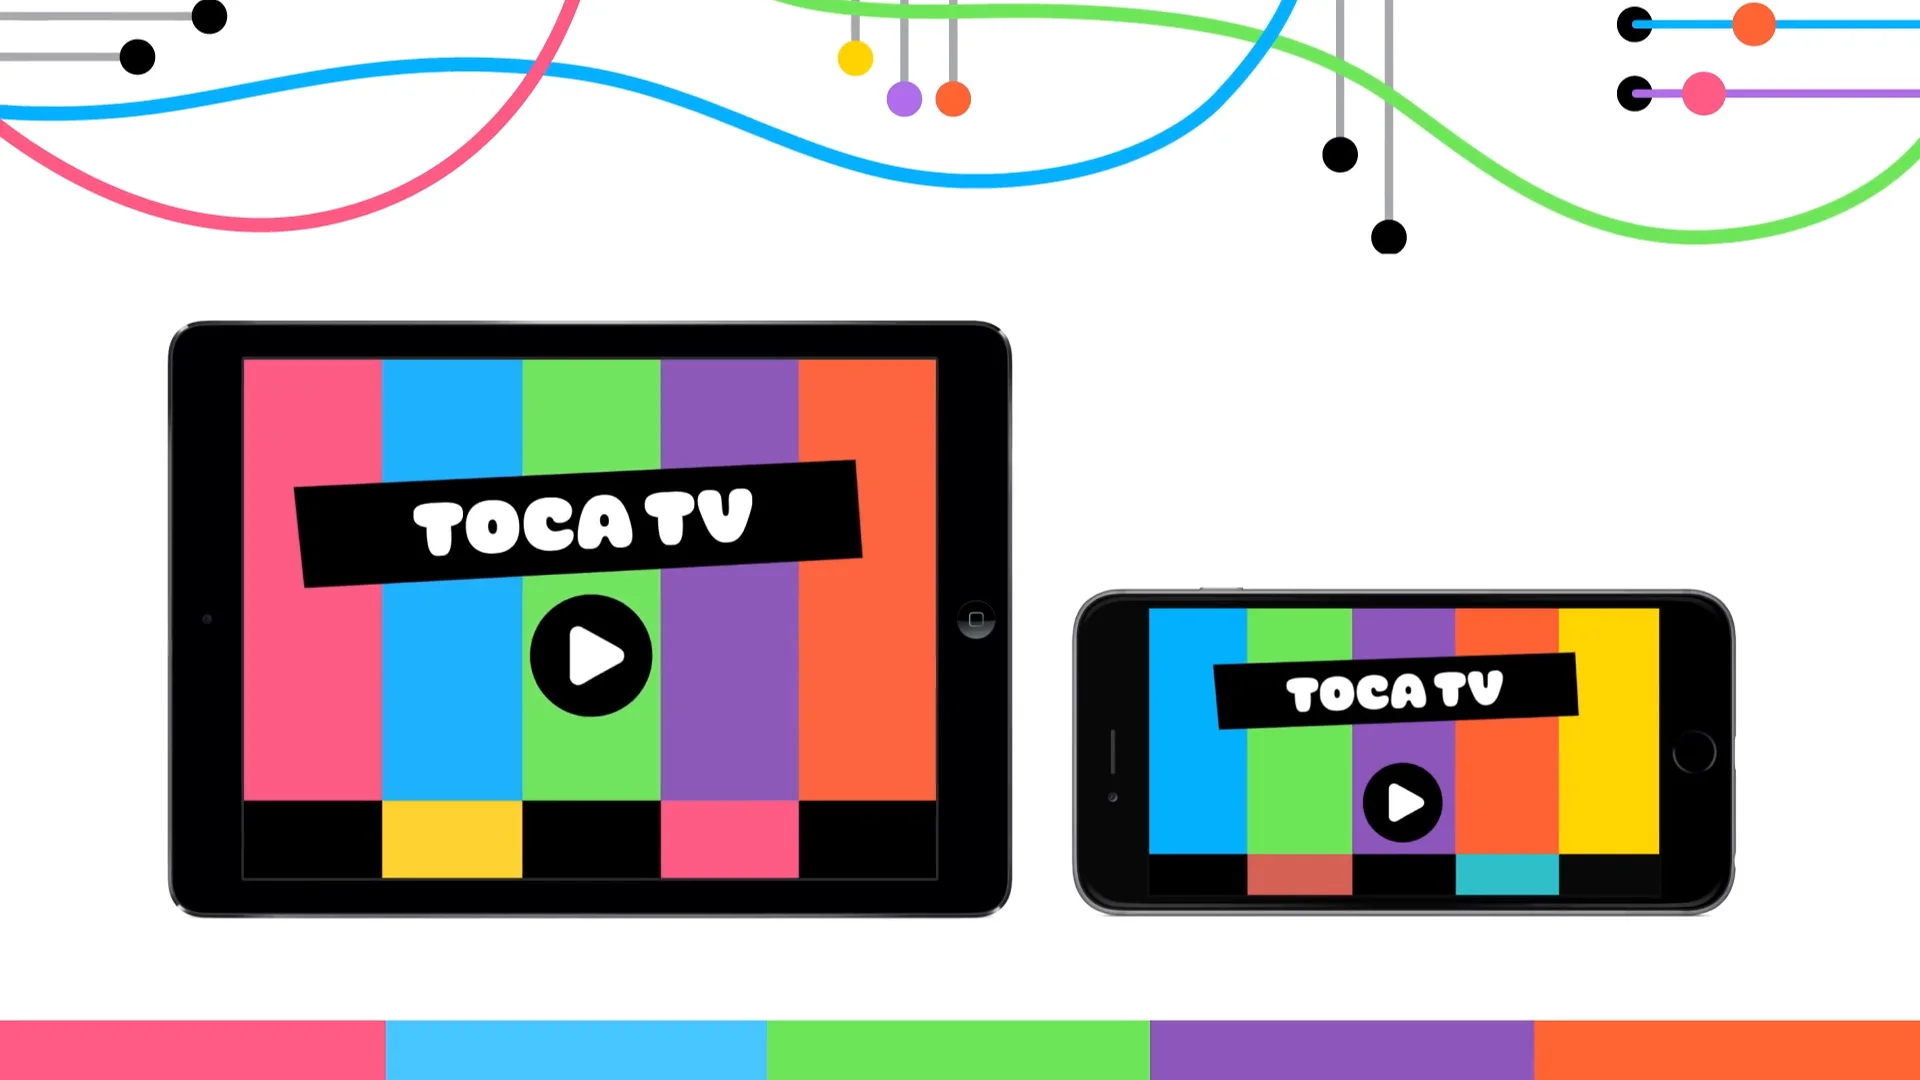 Toca Boca – small launch banner on Vimeo